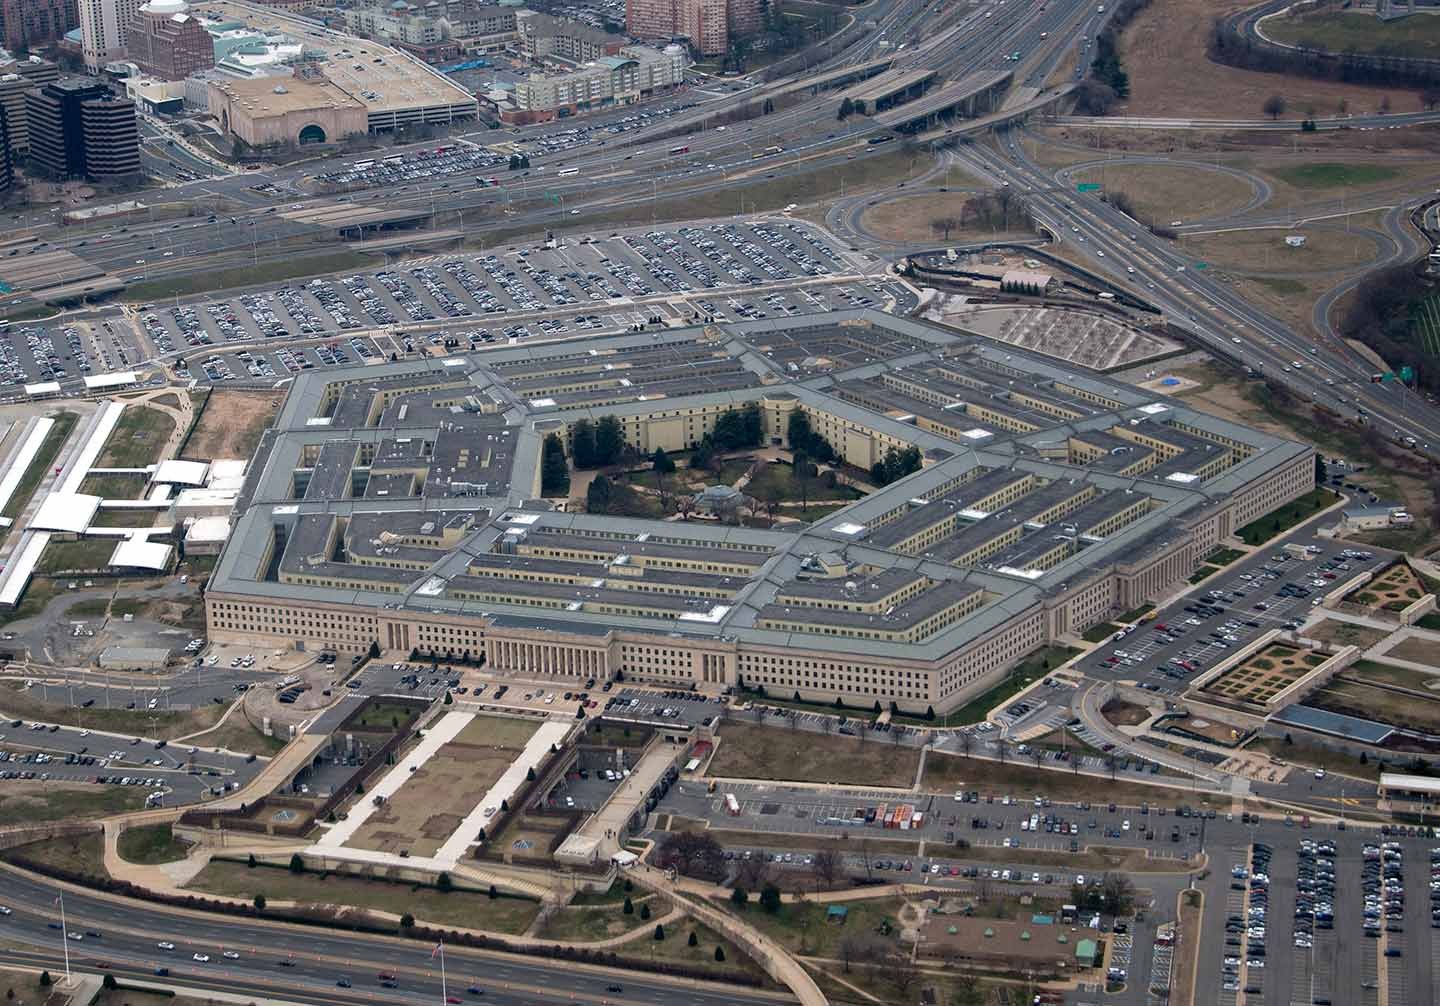 Make our Pentagon great again